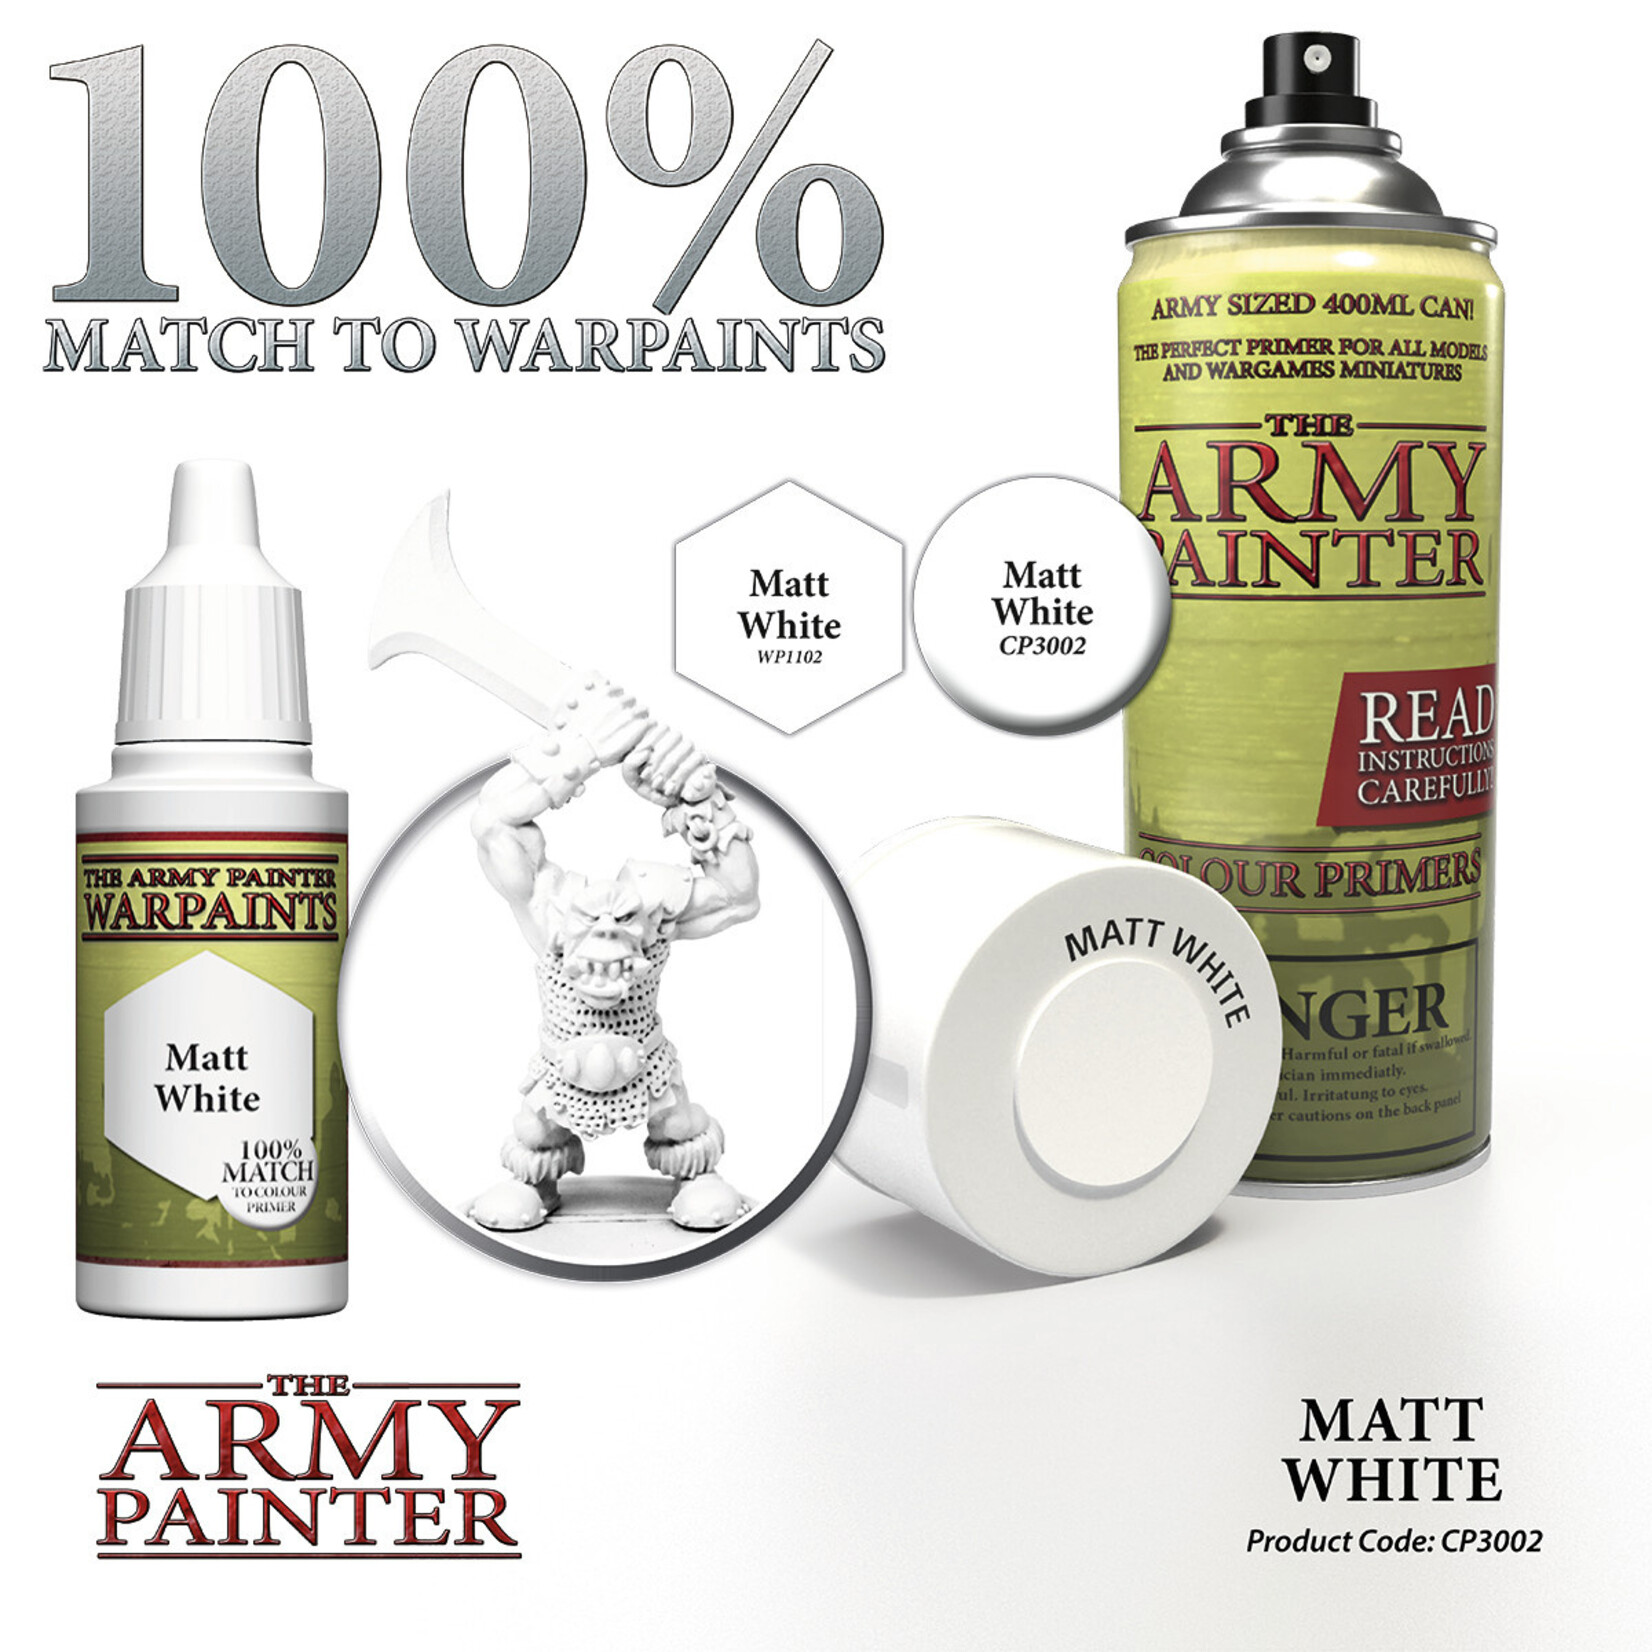 The Army Painter Color Primer Matte White